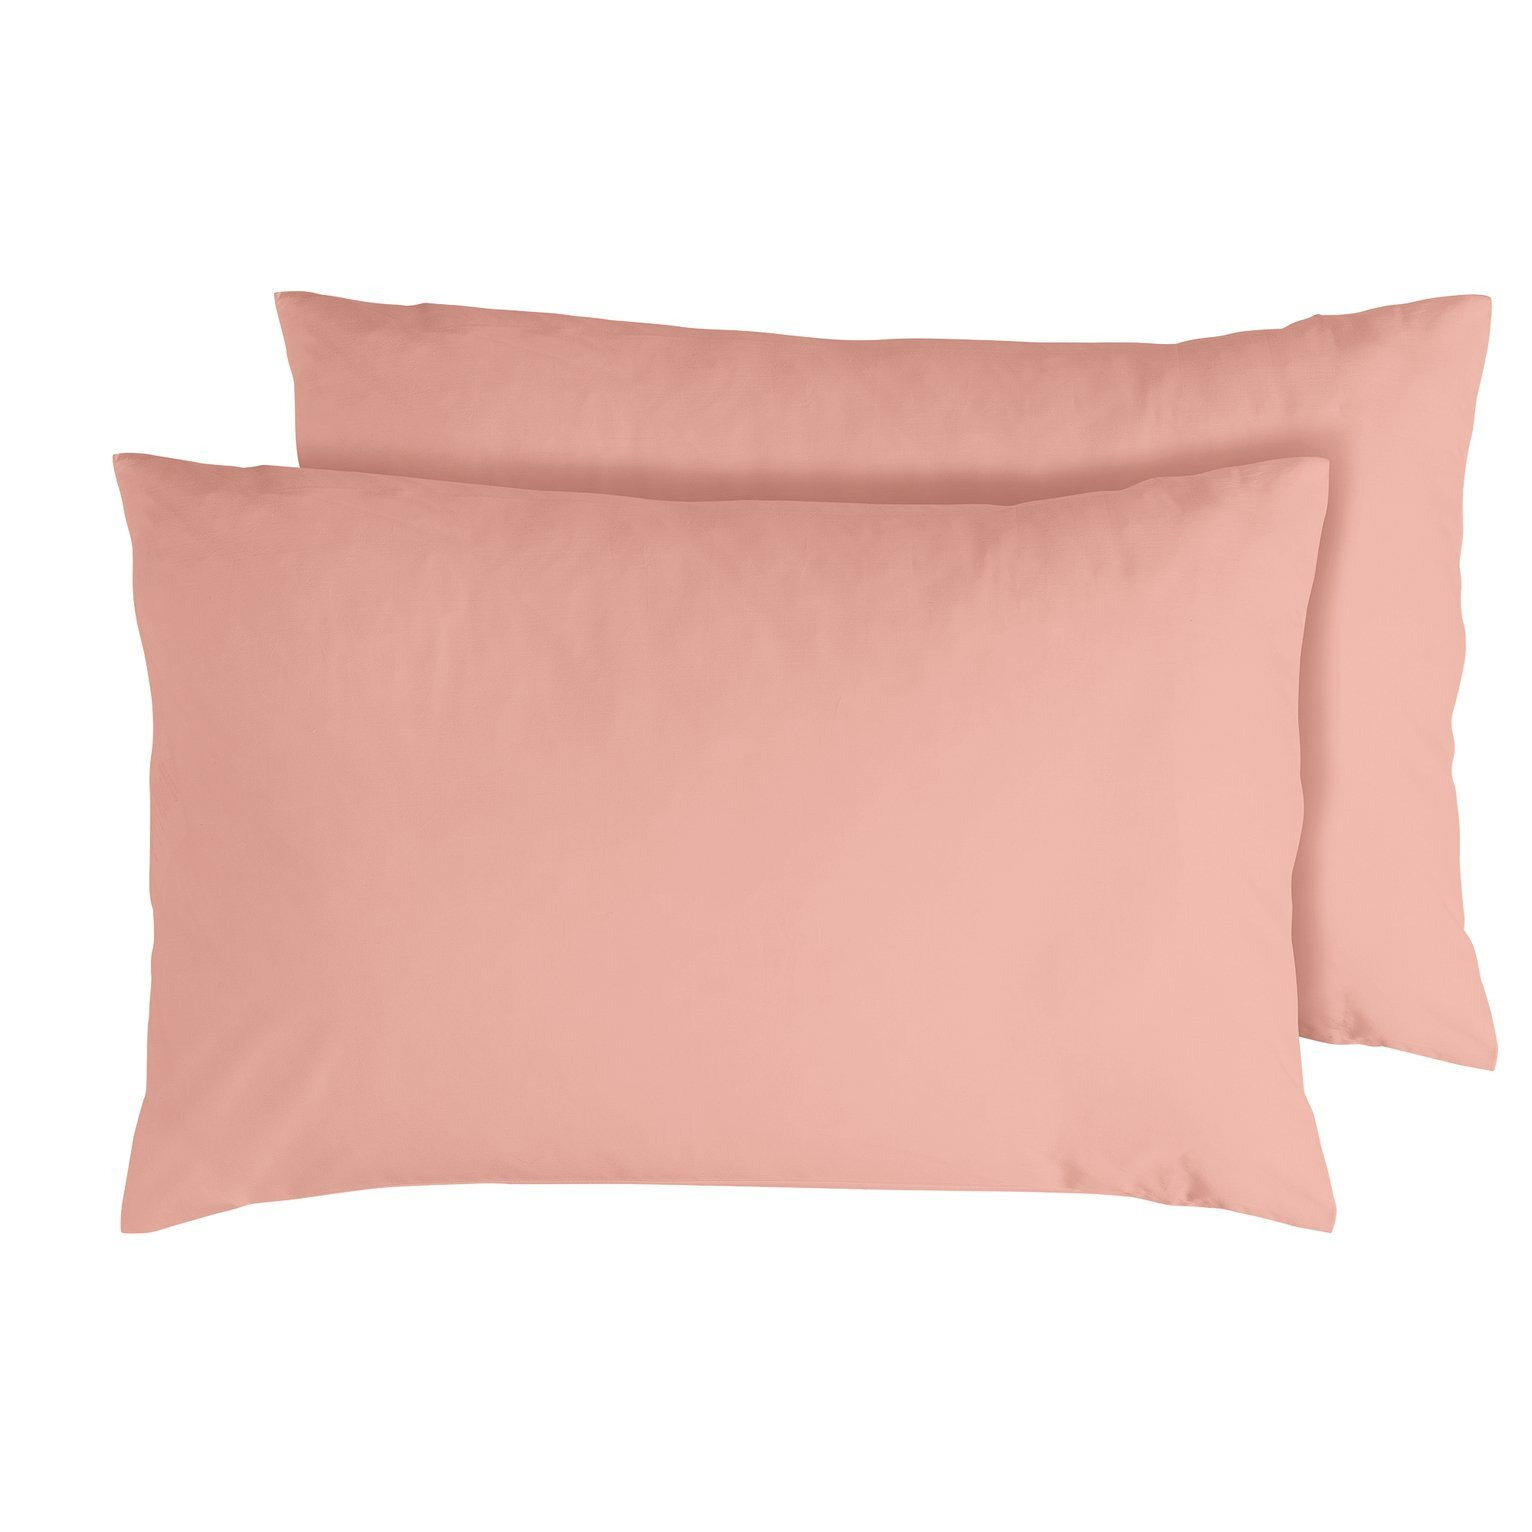 Habitat Egyptian Cotton Standard Pillowcase Pair - Blush - image 1